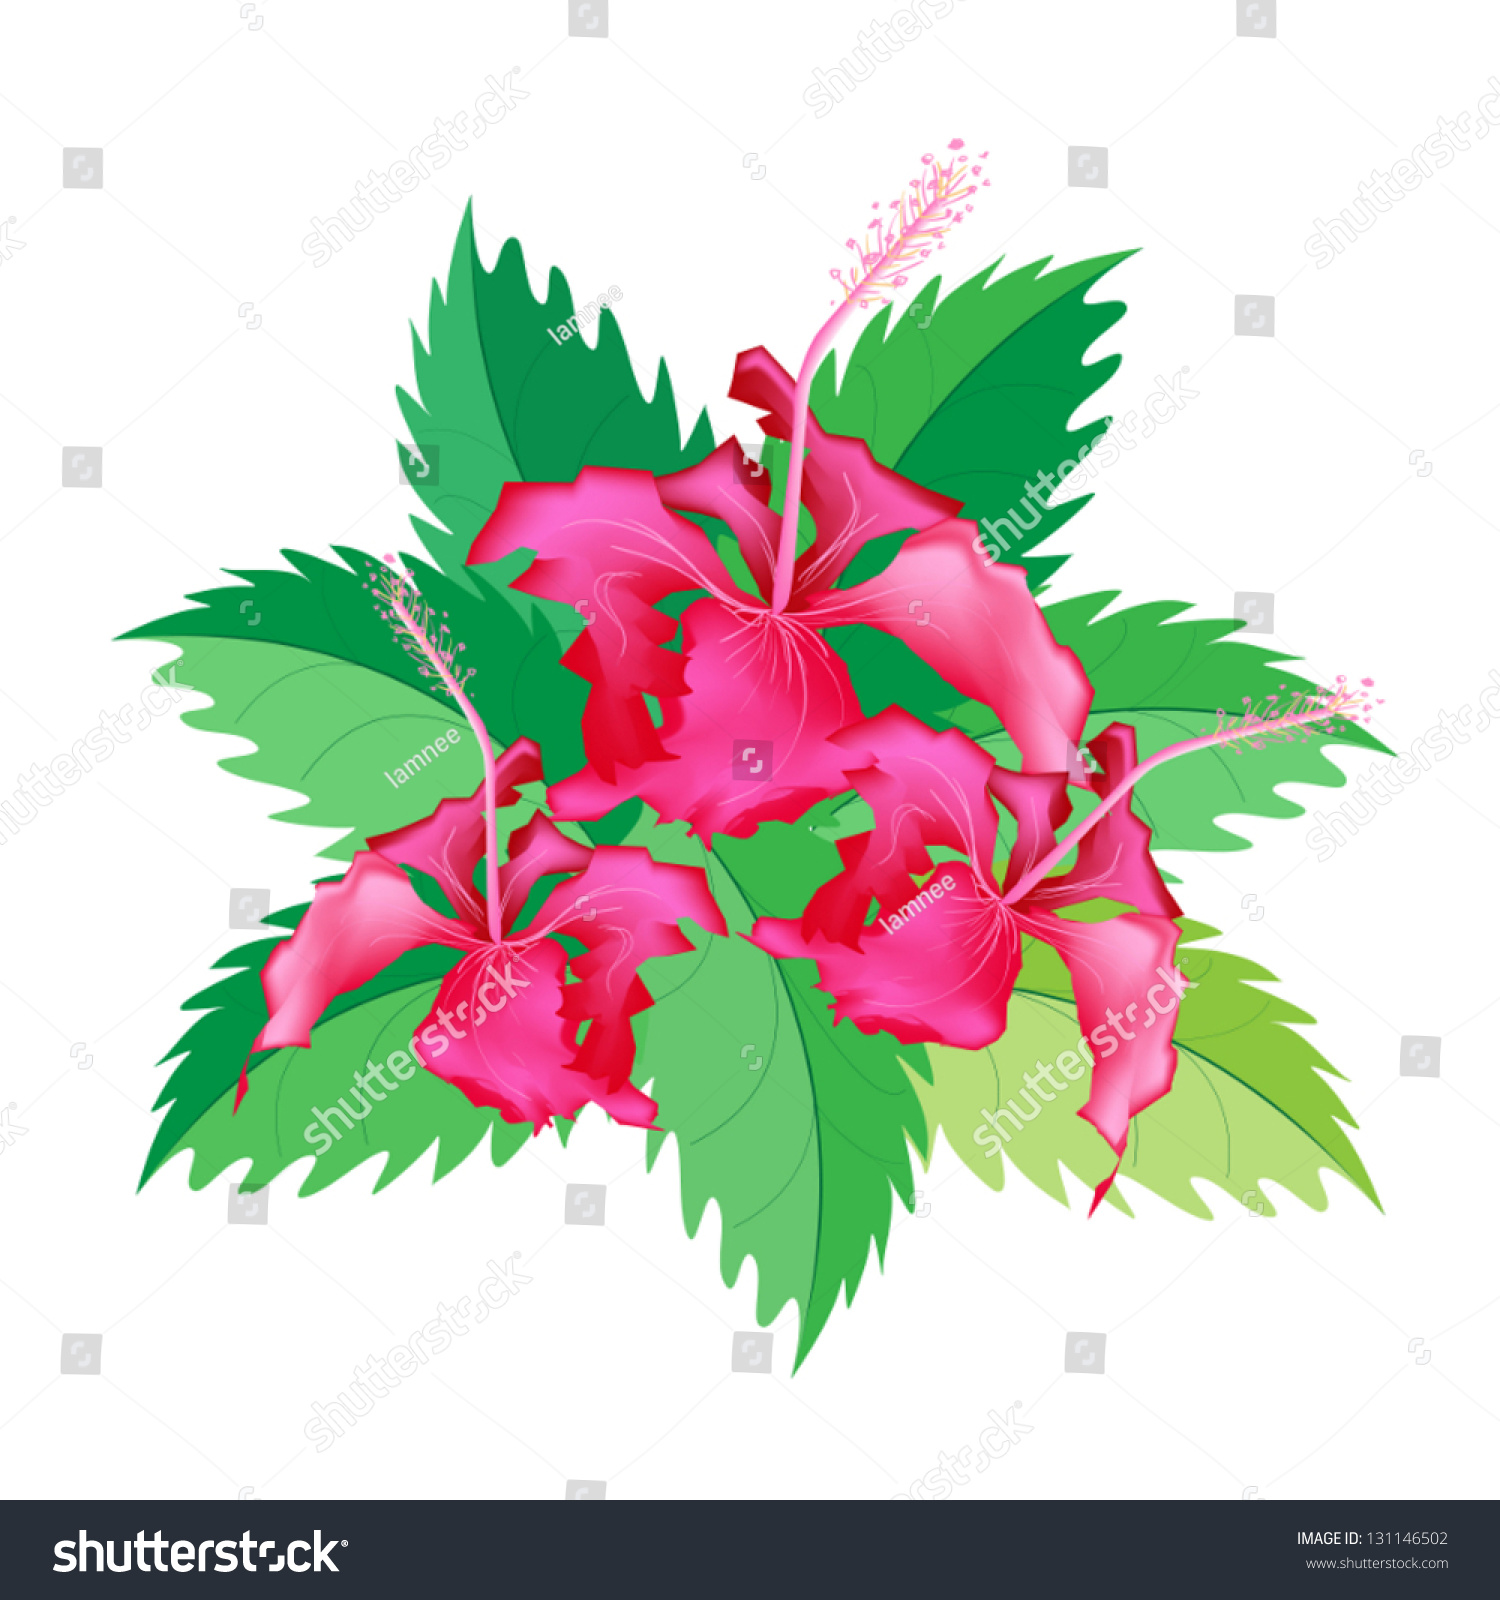 beautiful flower illustration group fresh red stock vector royalty free 131146502 https www shutterstock com image vector beautiful flower illustration group fresh red 131146502